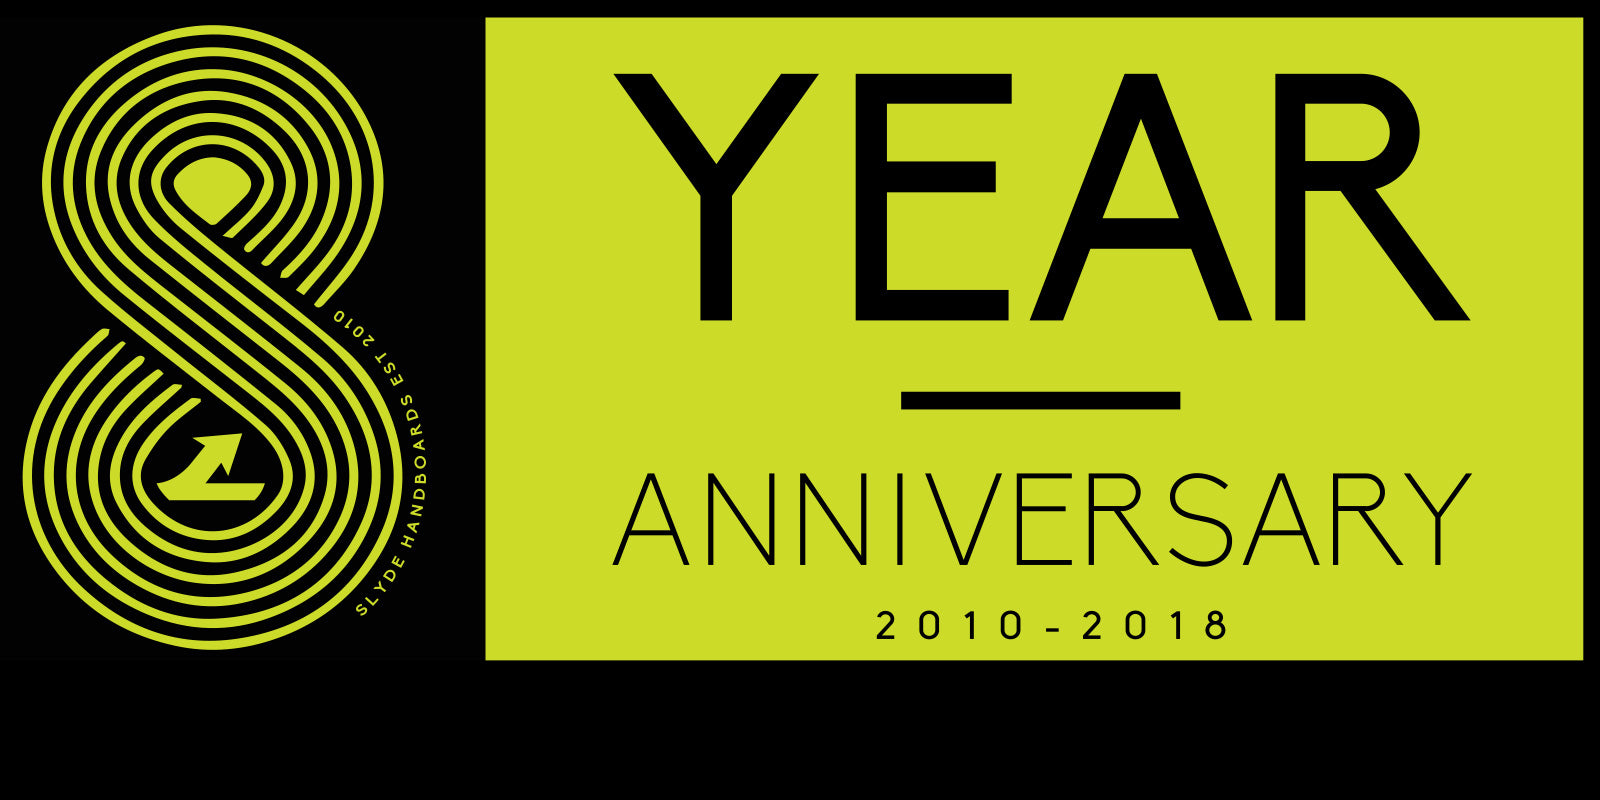 Happy Anniversary! Let's Celebrate 8 Years of Slyde Handboards 😁